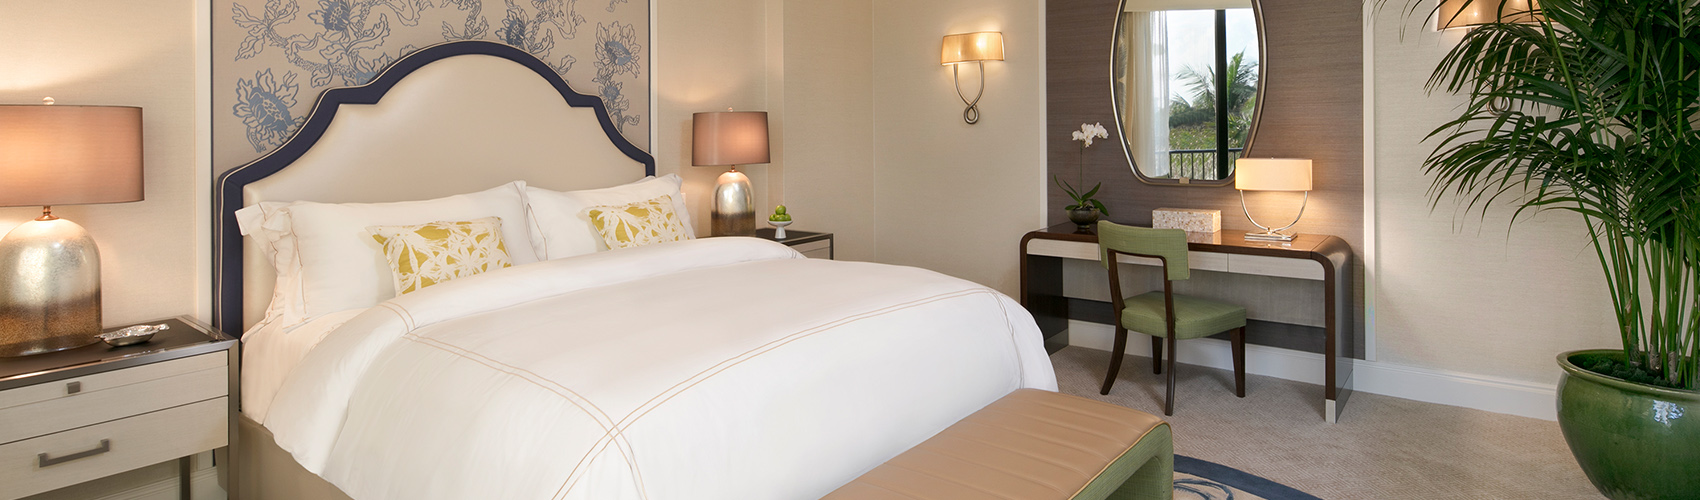 Premium Suite with Partial Ocean View Bedroom